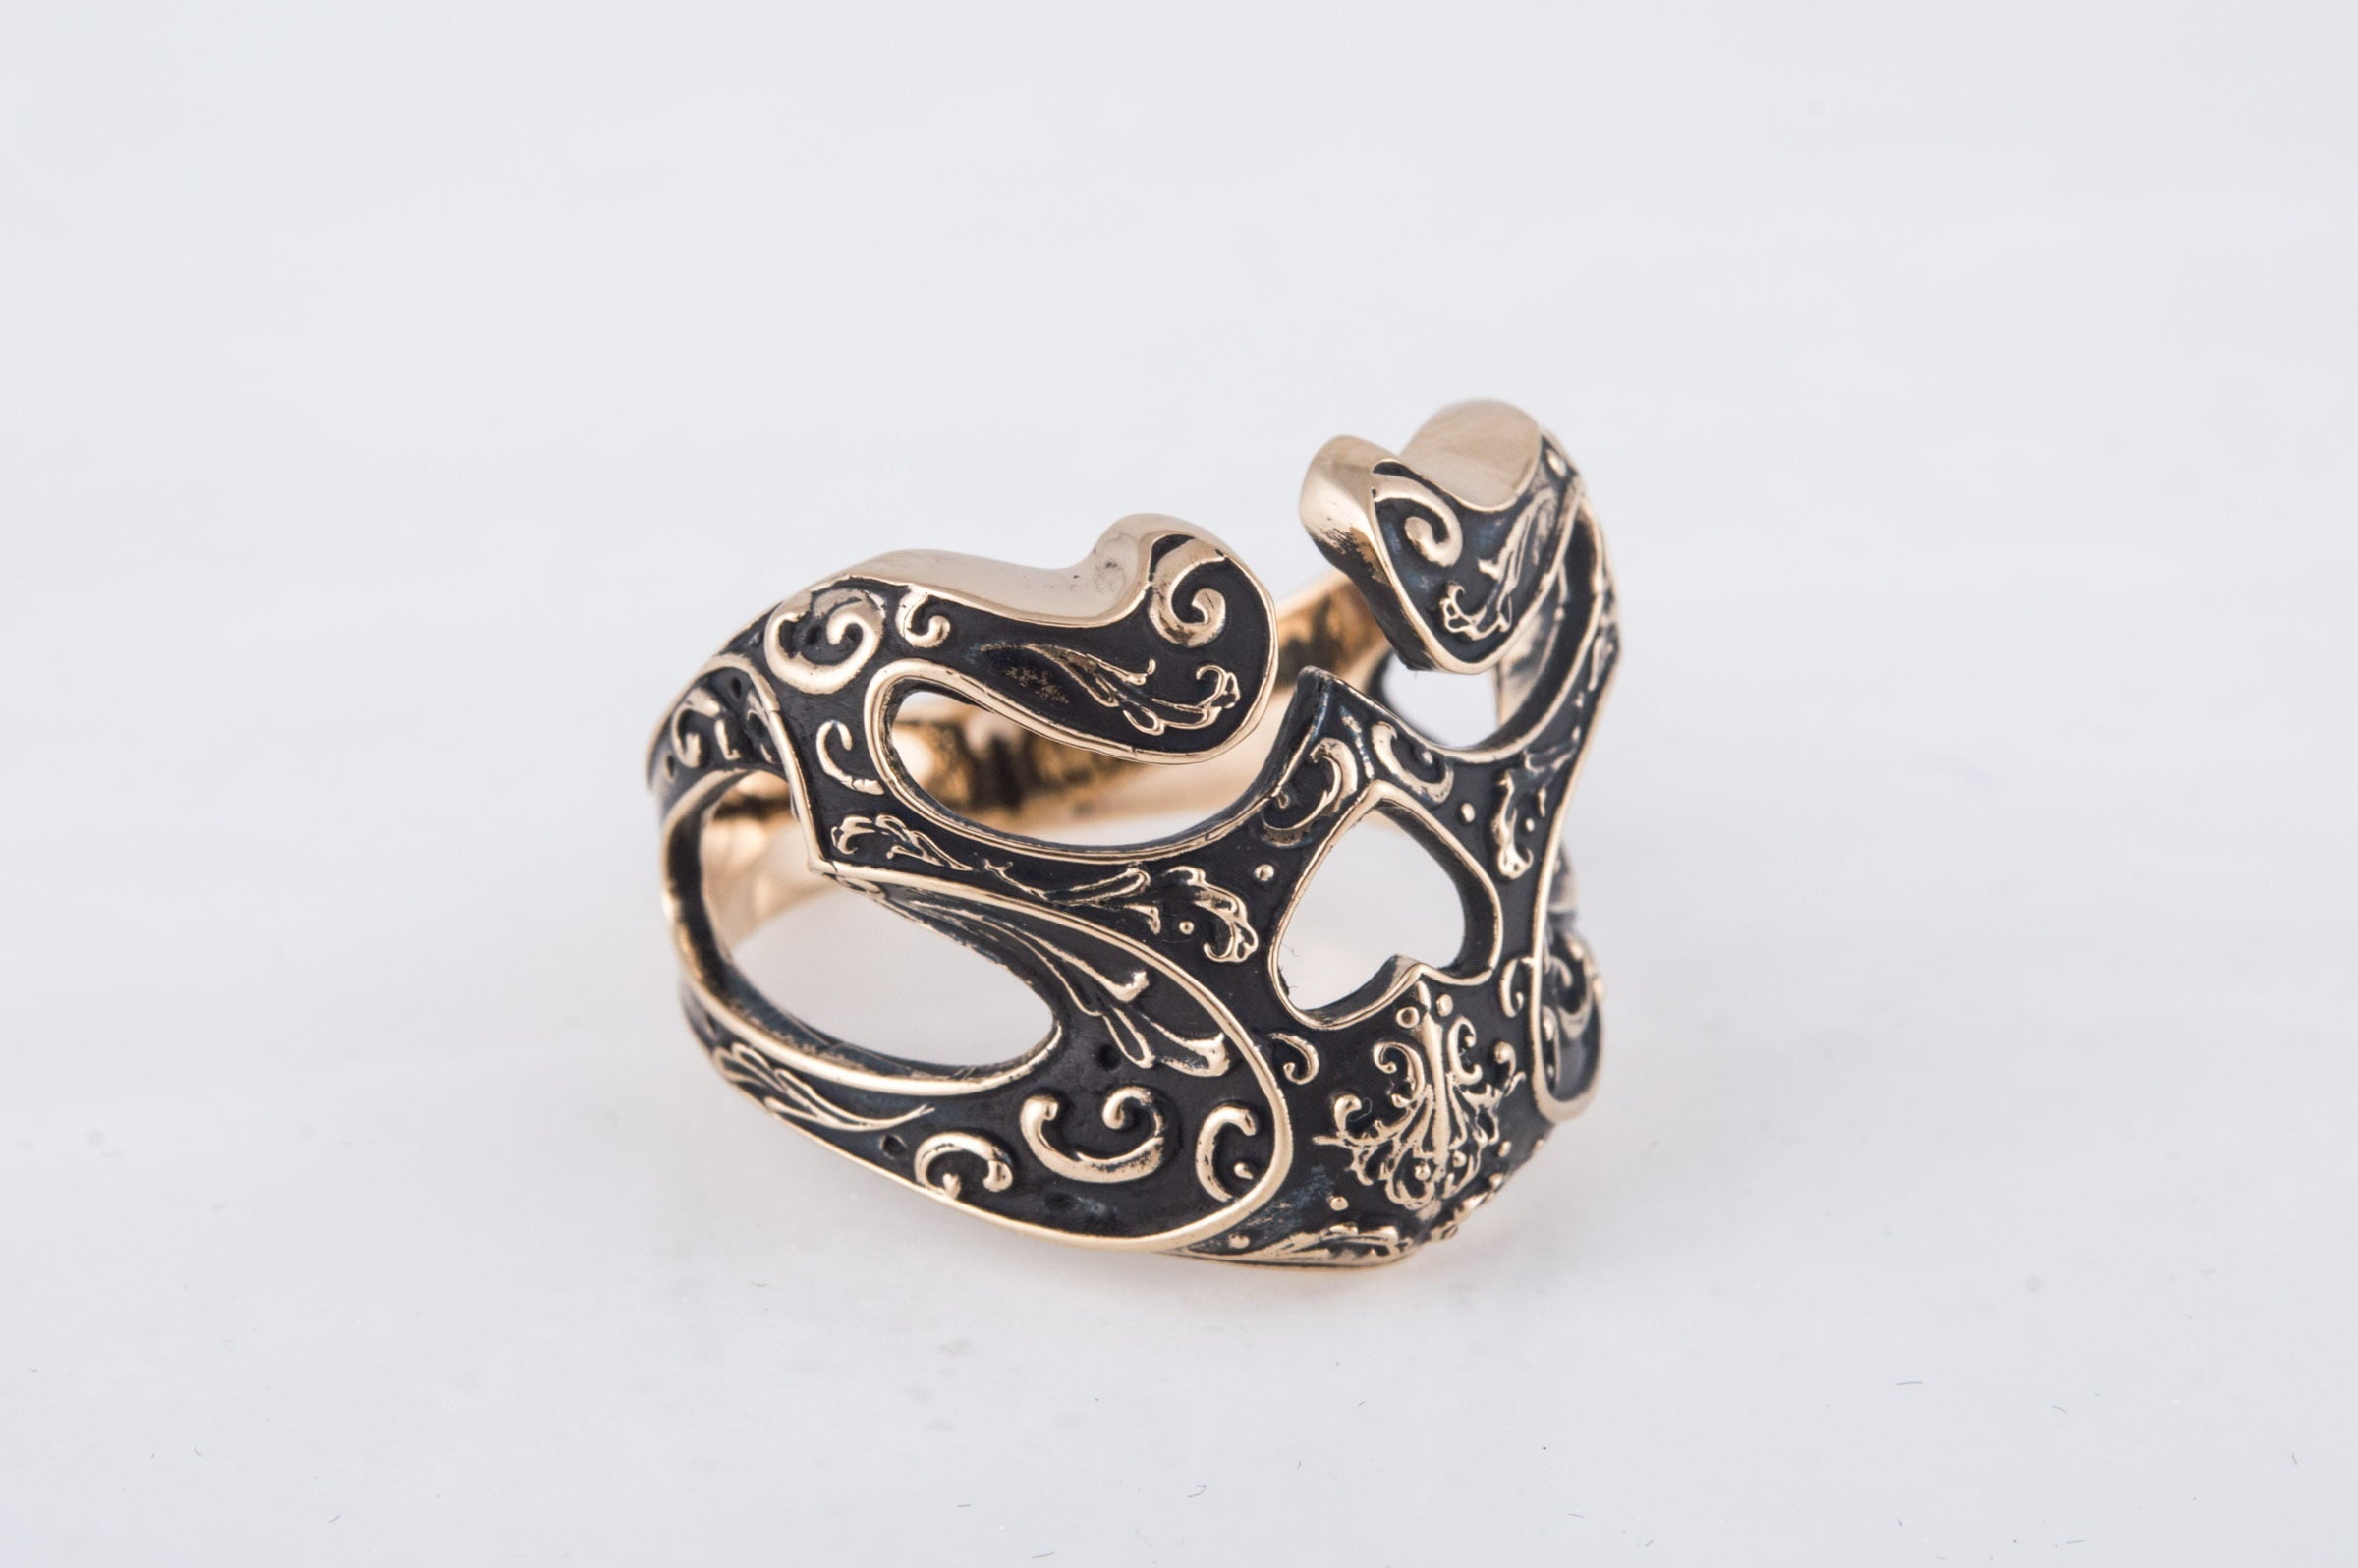 Skull Ring with Ornament Bronze Unique Biker Jewelry - vikingworkshop